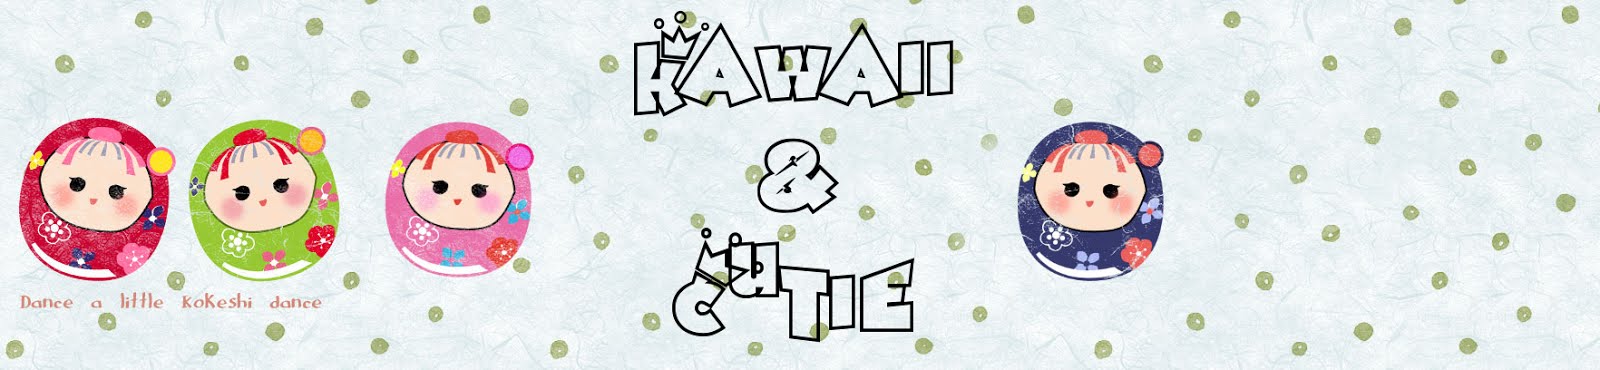 I love Kawaii